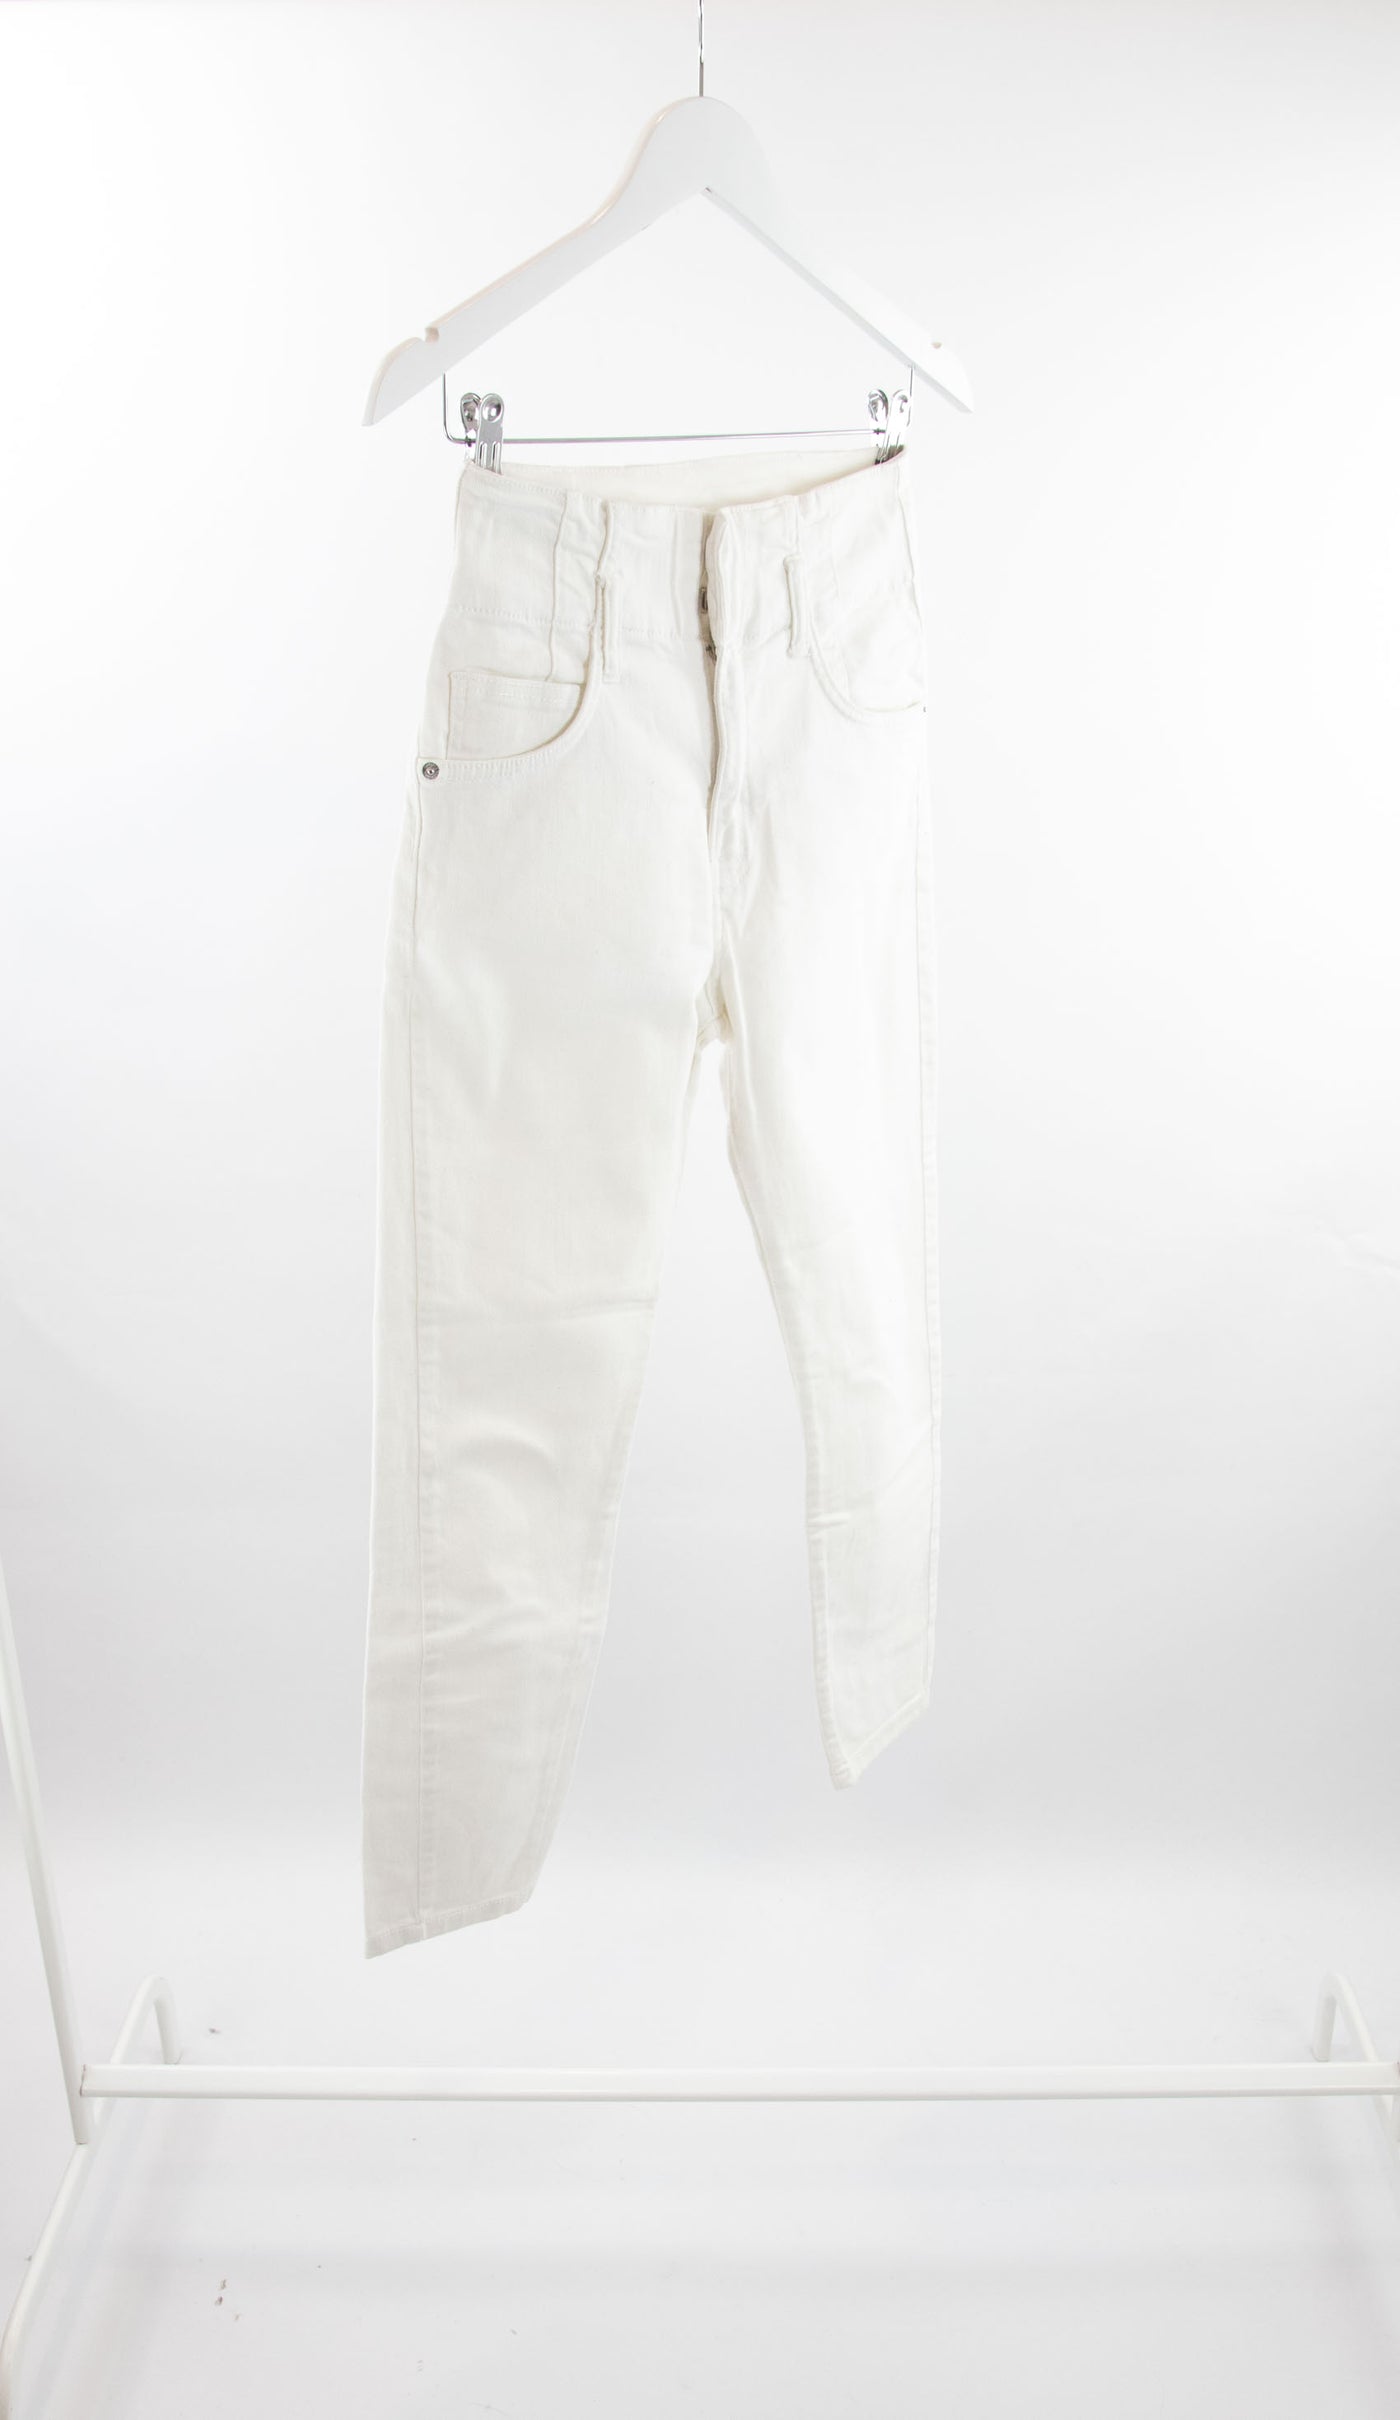 Jeans blanco tiro alto